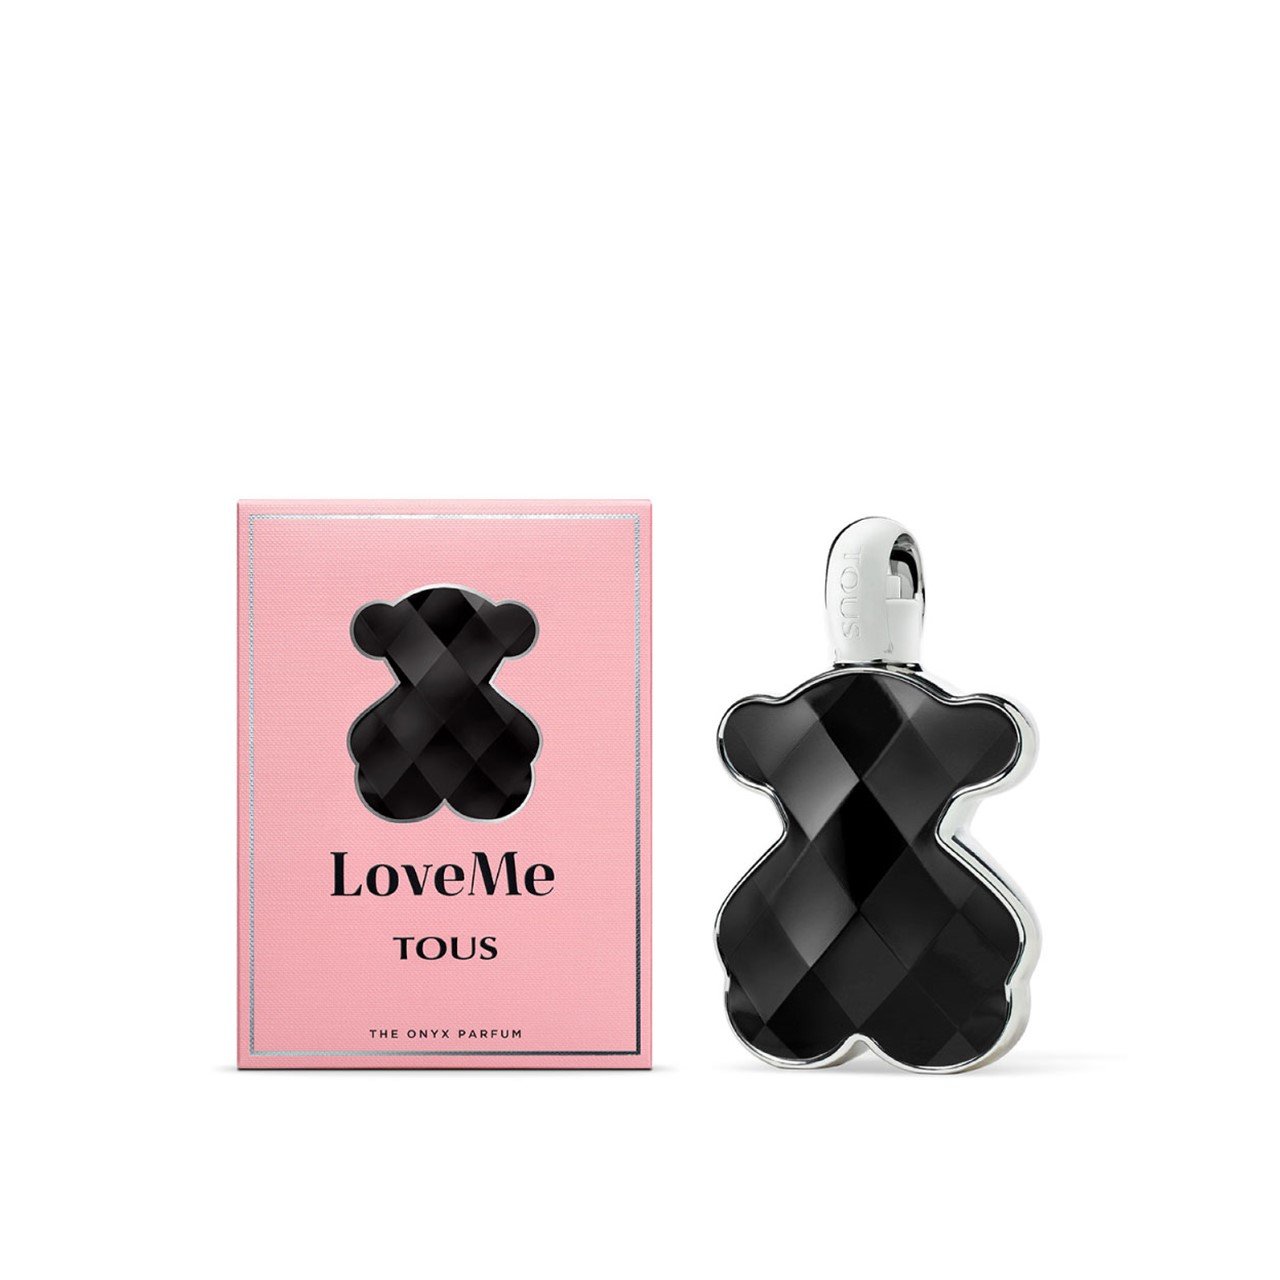 Buy Tous LoveMe The Onyx Parfum · USA